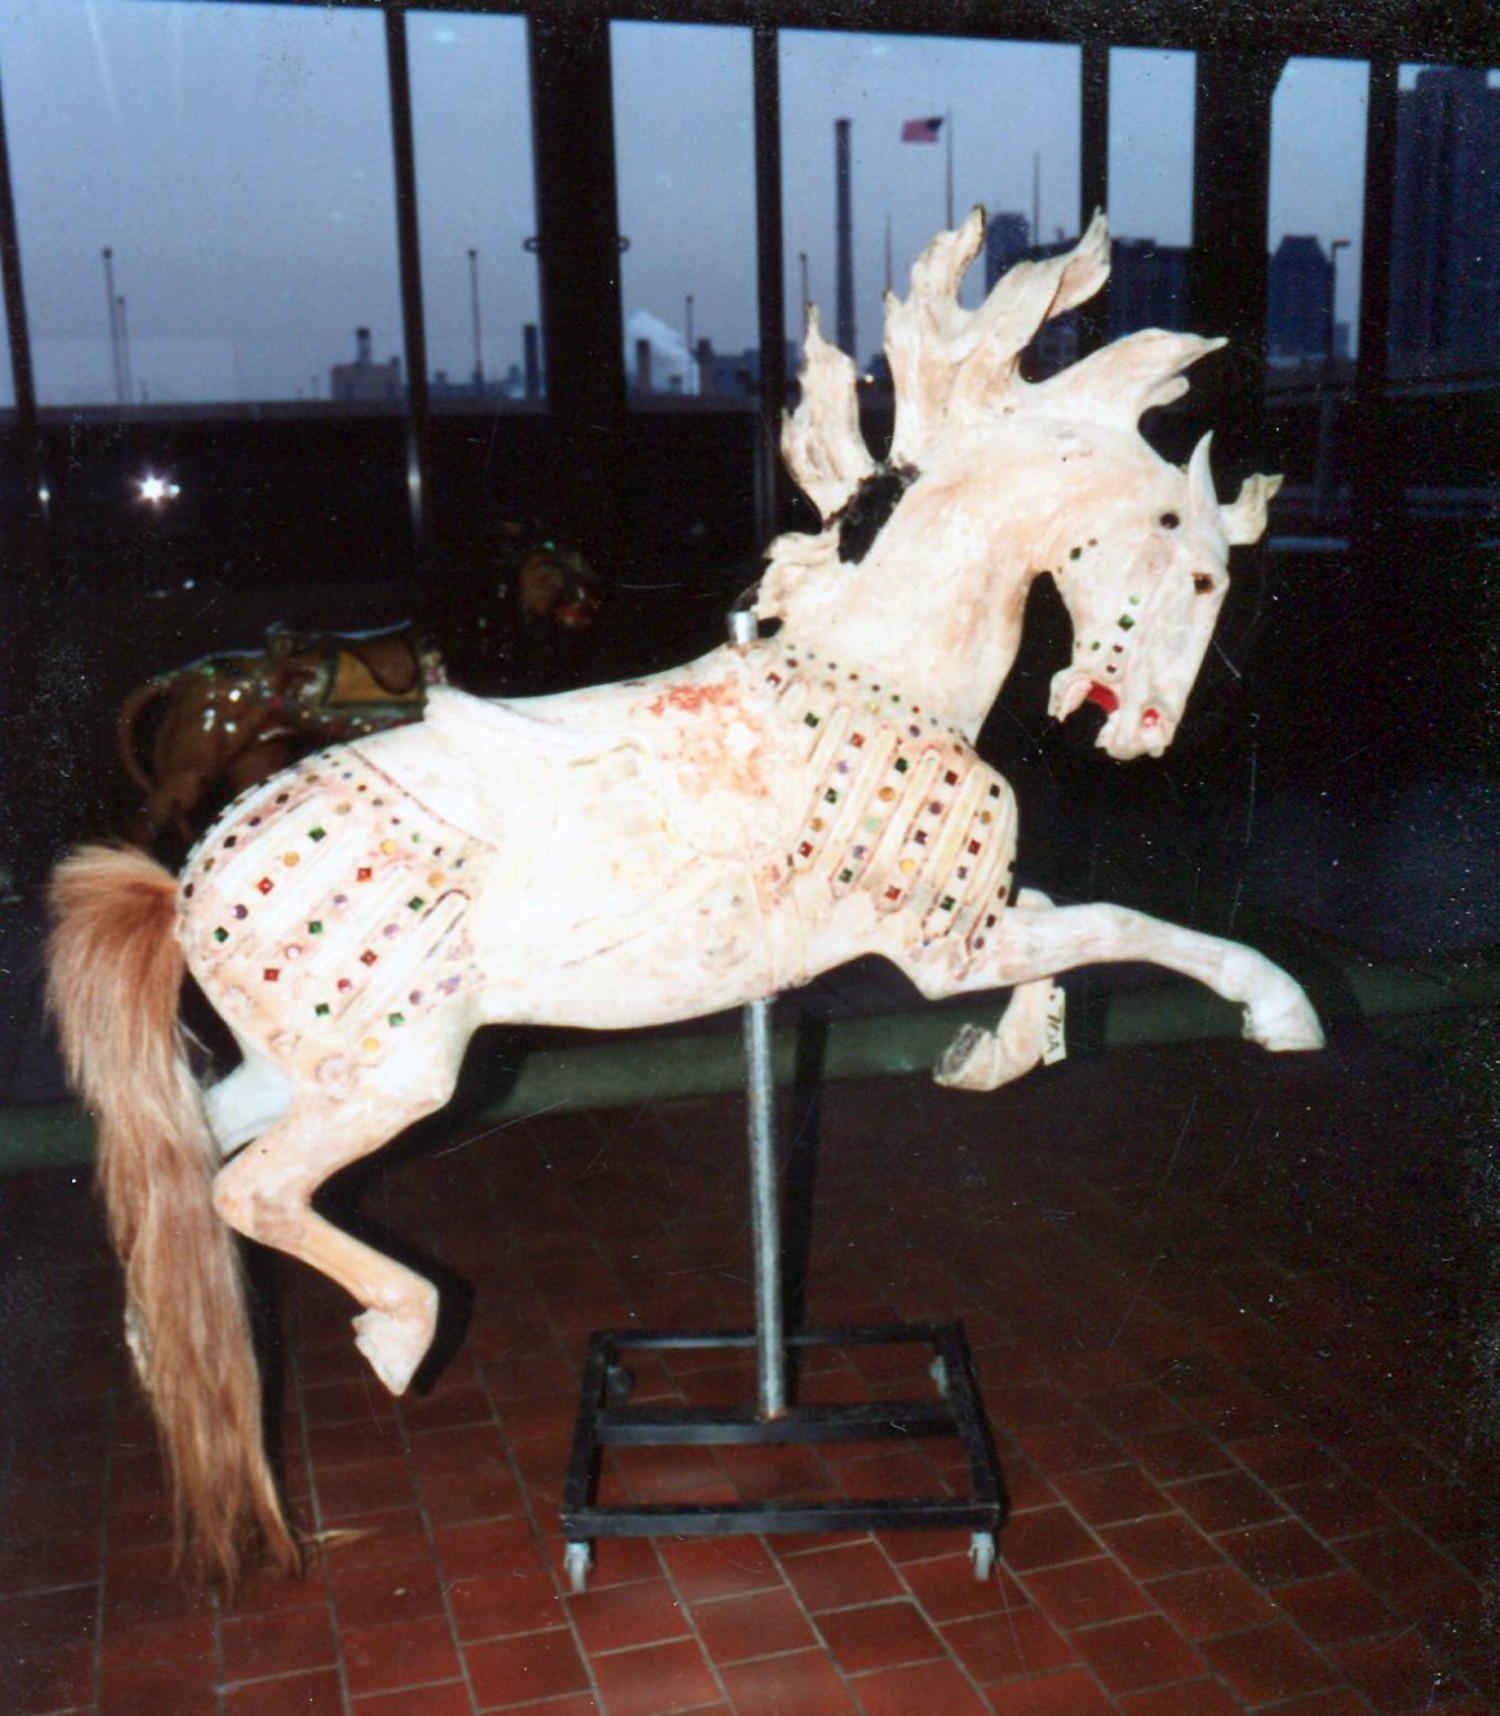 Illions-flyng-mane-carousel-horse-world-record-auction-121k